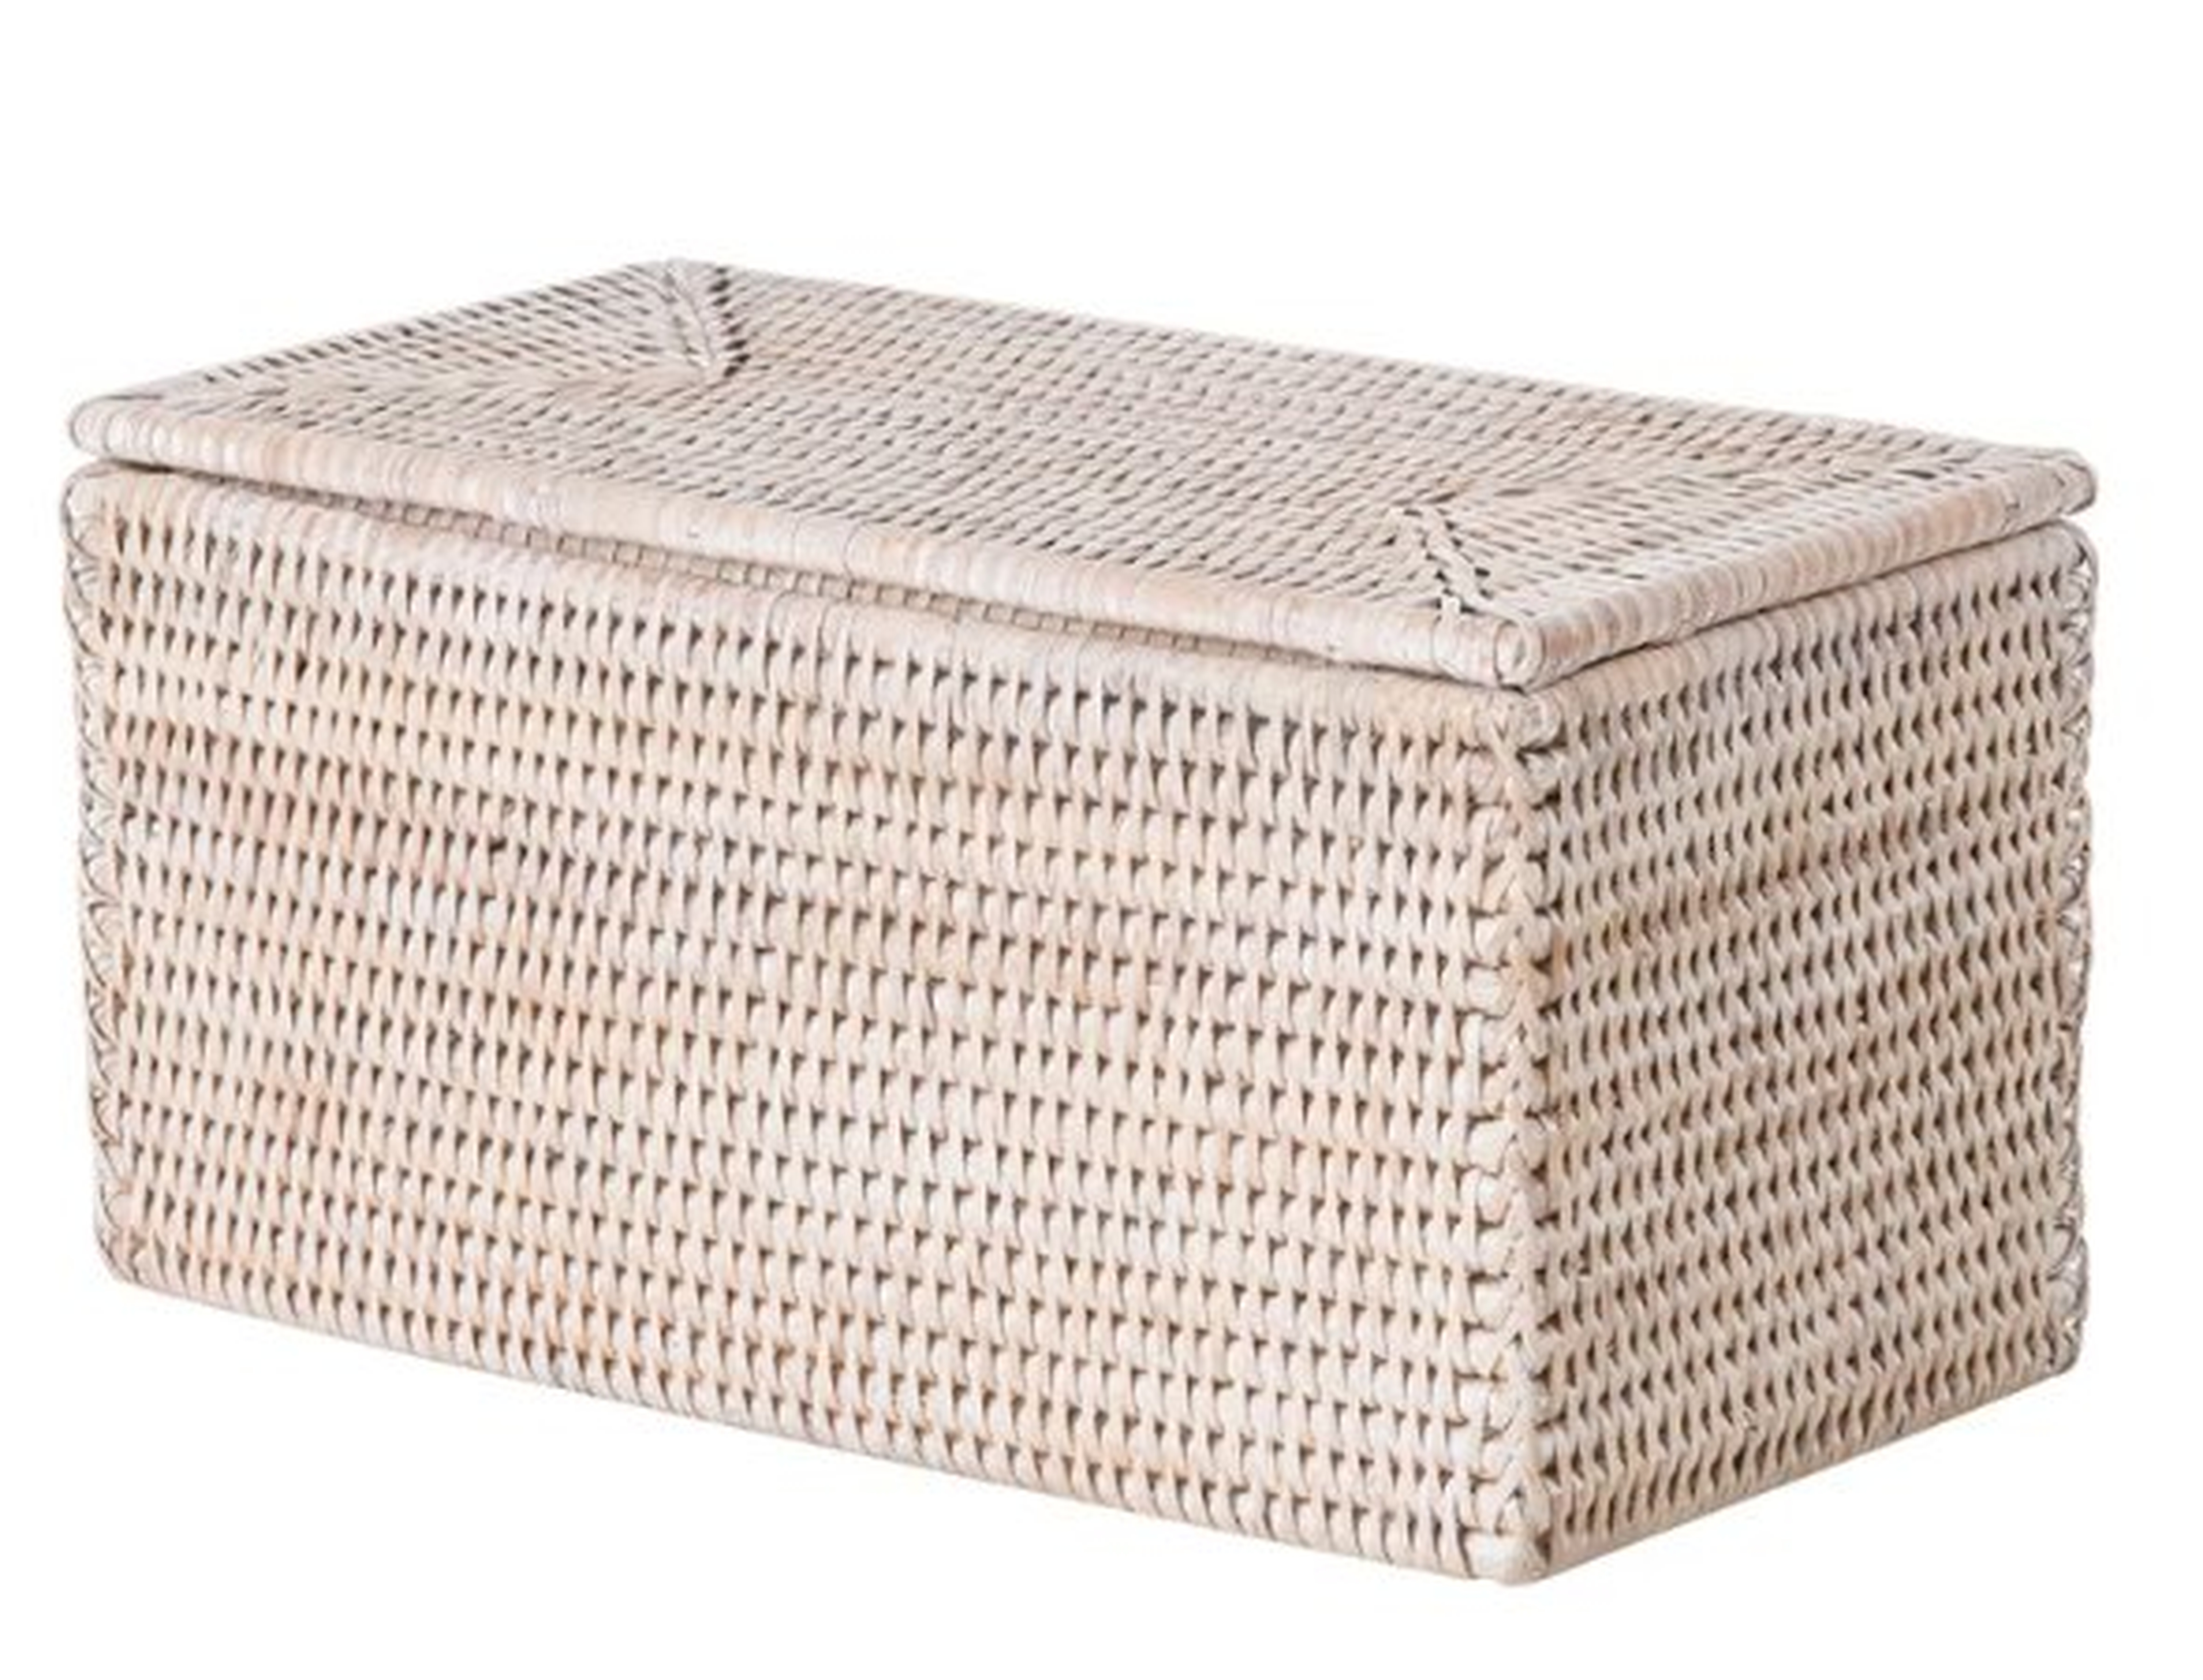 Rectangular Storage and Toilet Roll Box Rattan Basket- White Wash - Wayfair